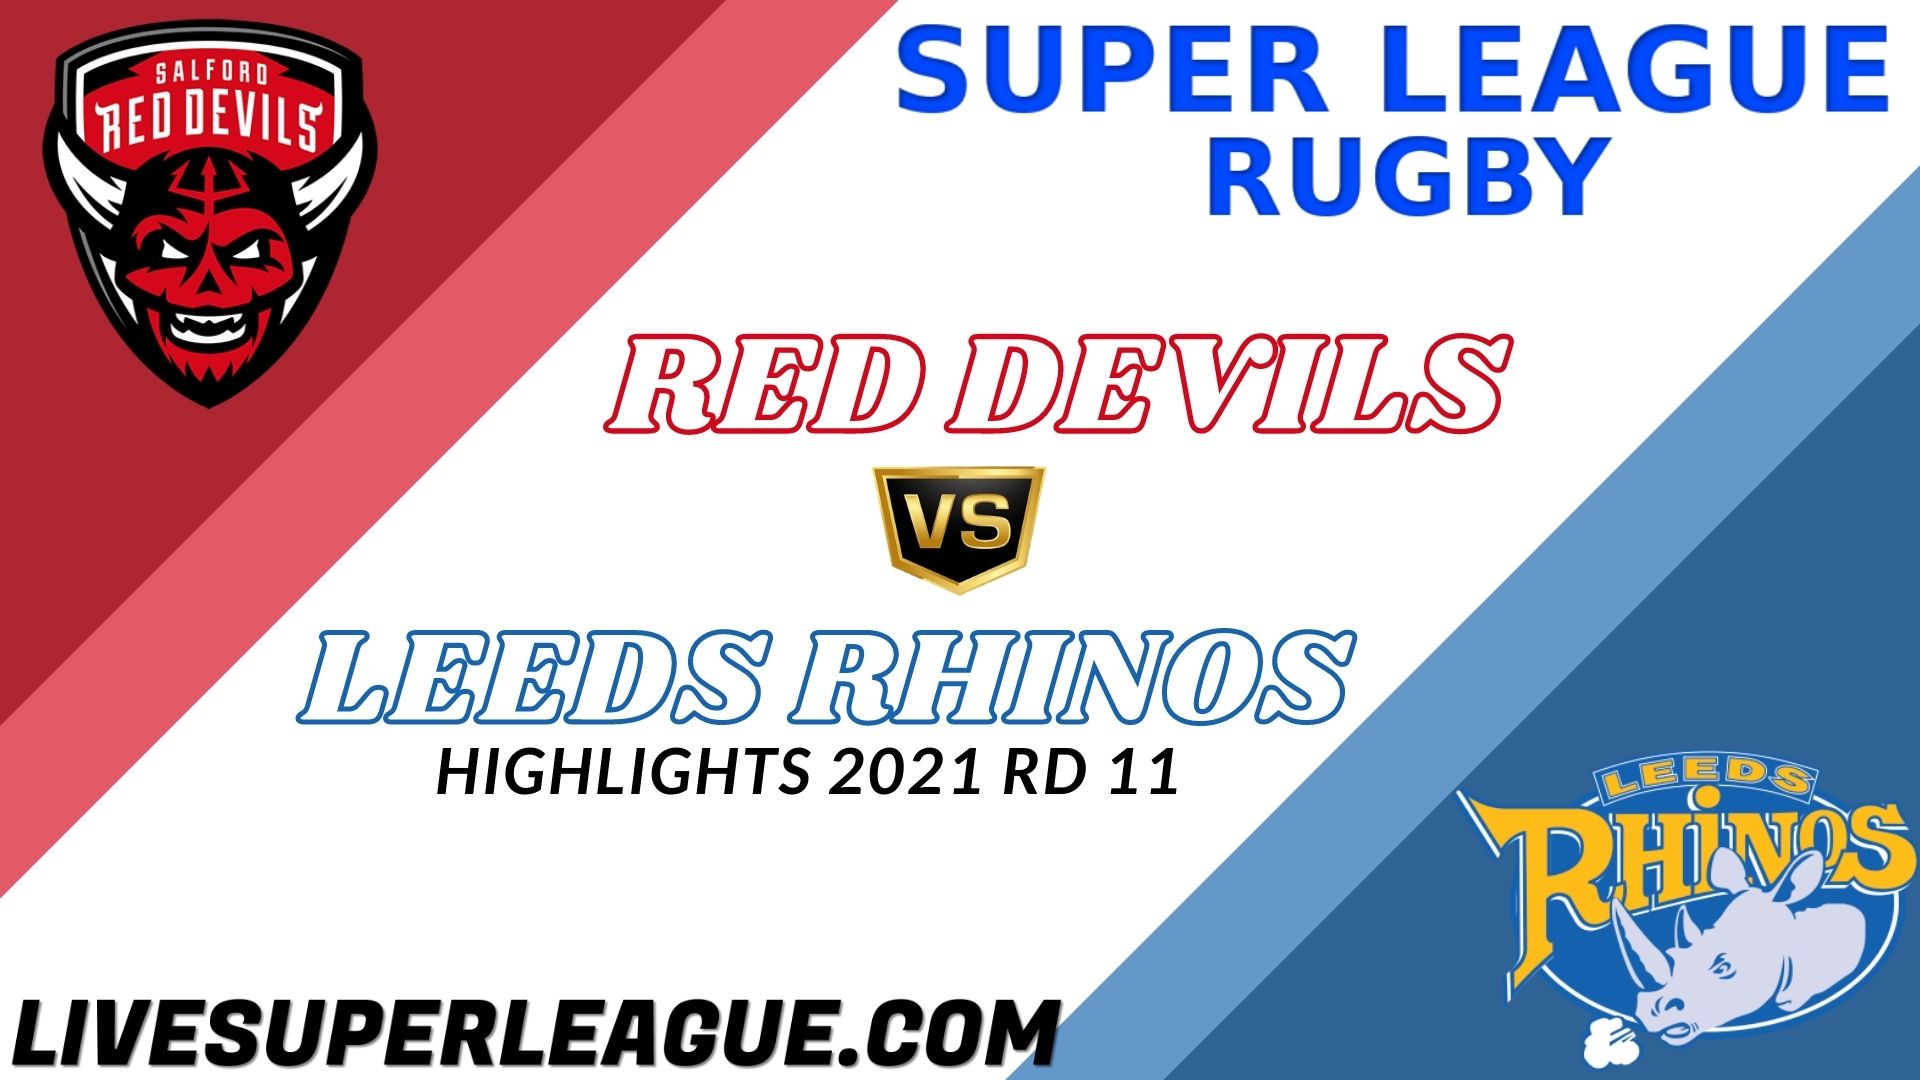 Salford Red Devils Vs Leeds Rhinos Highlights 2021